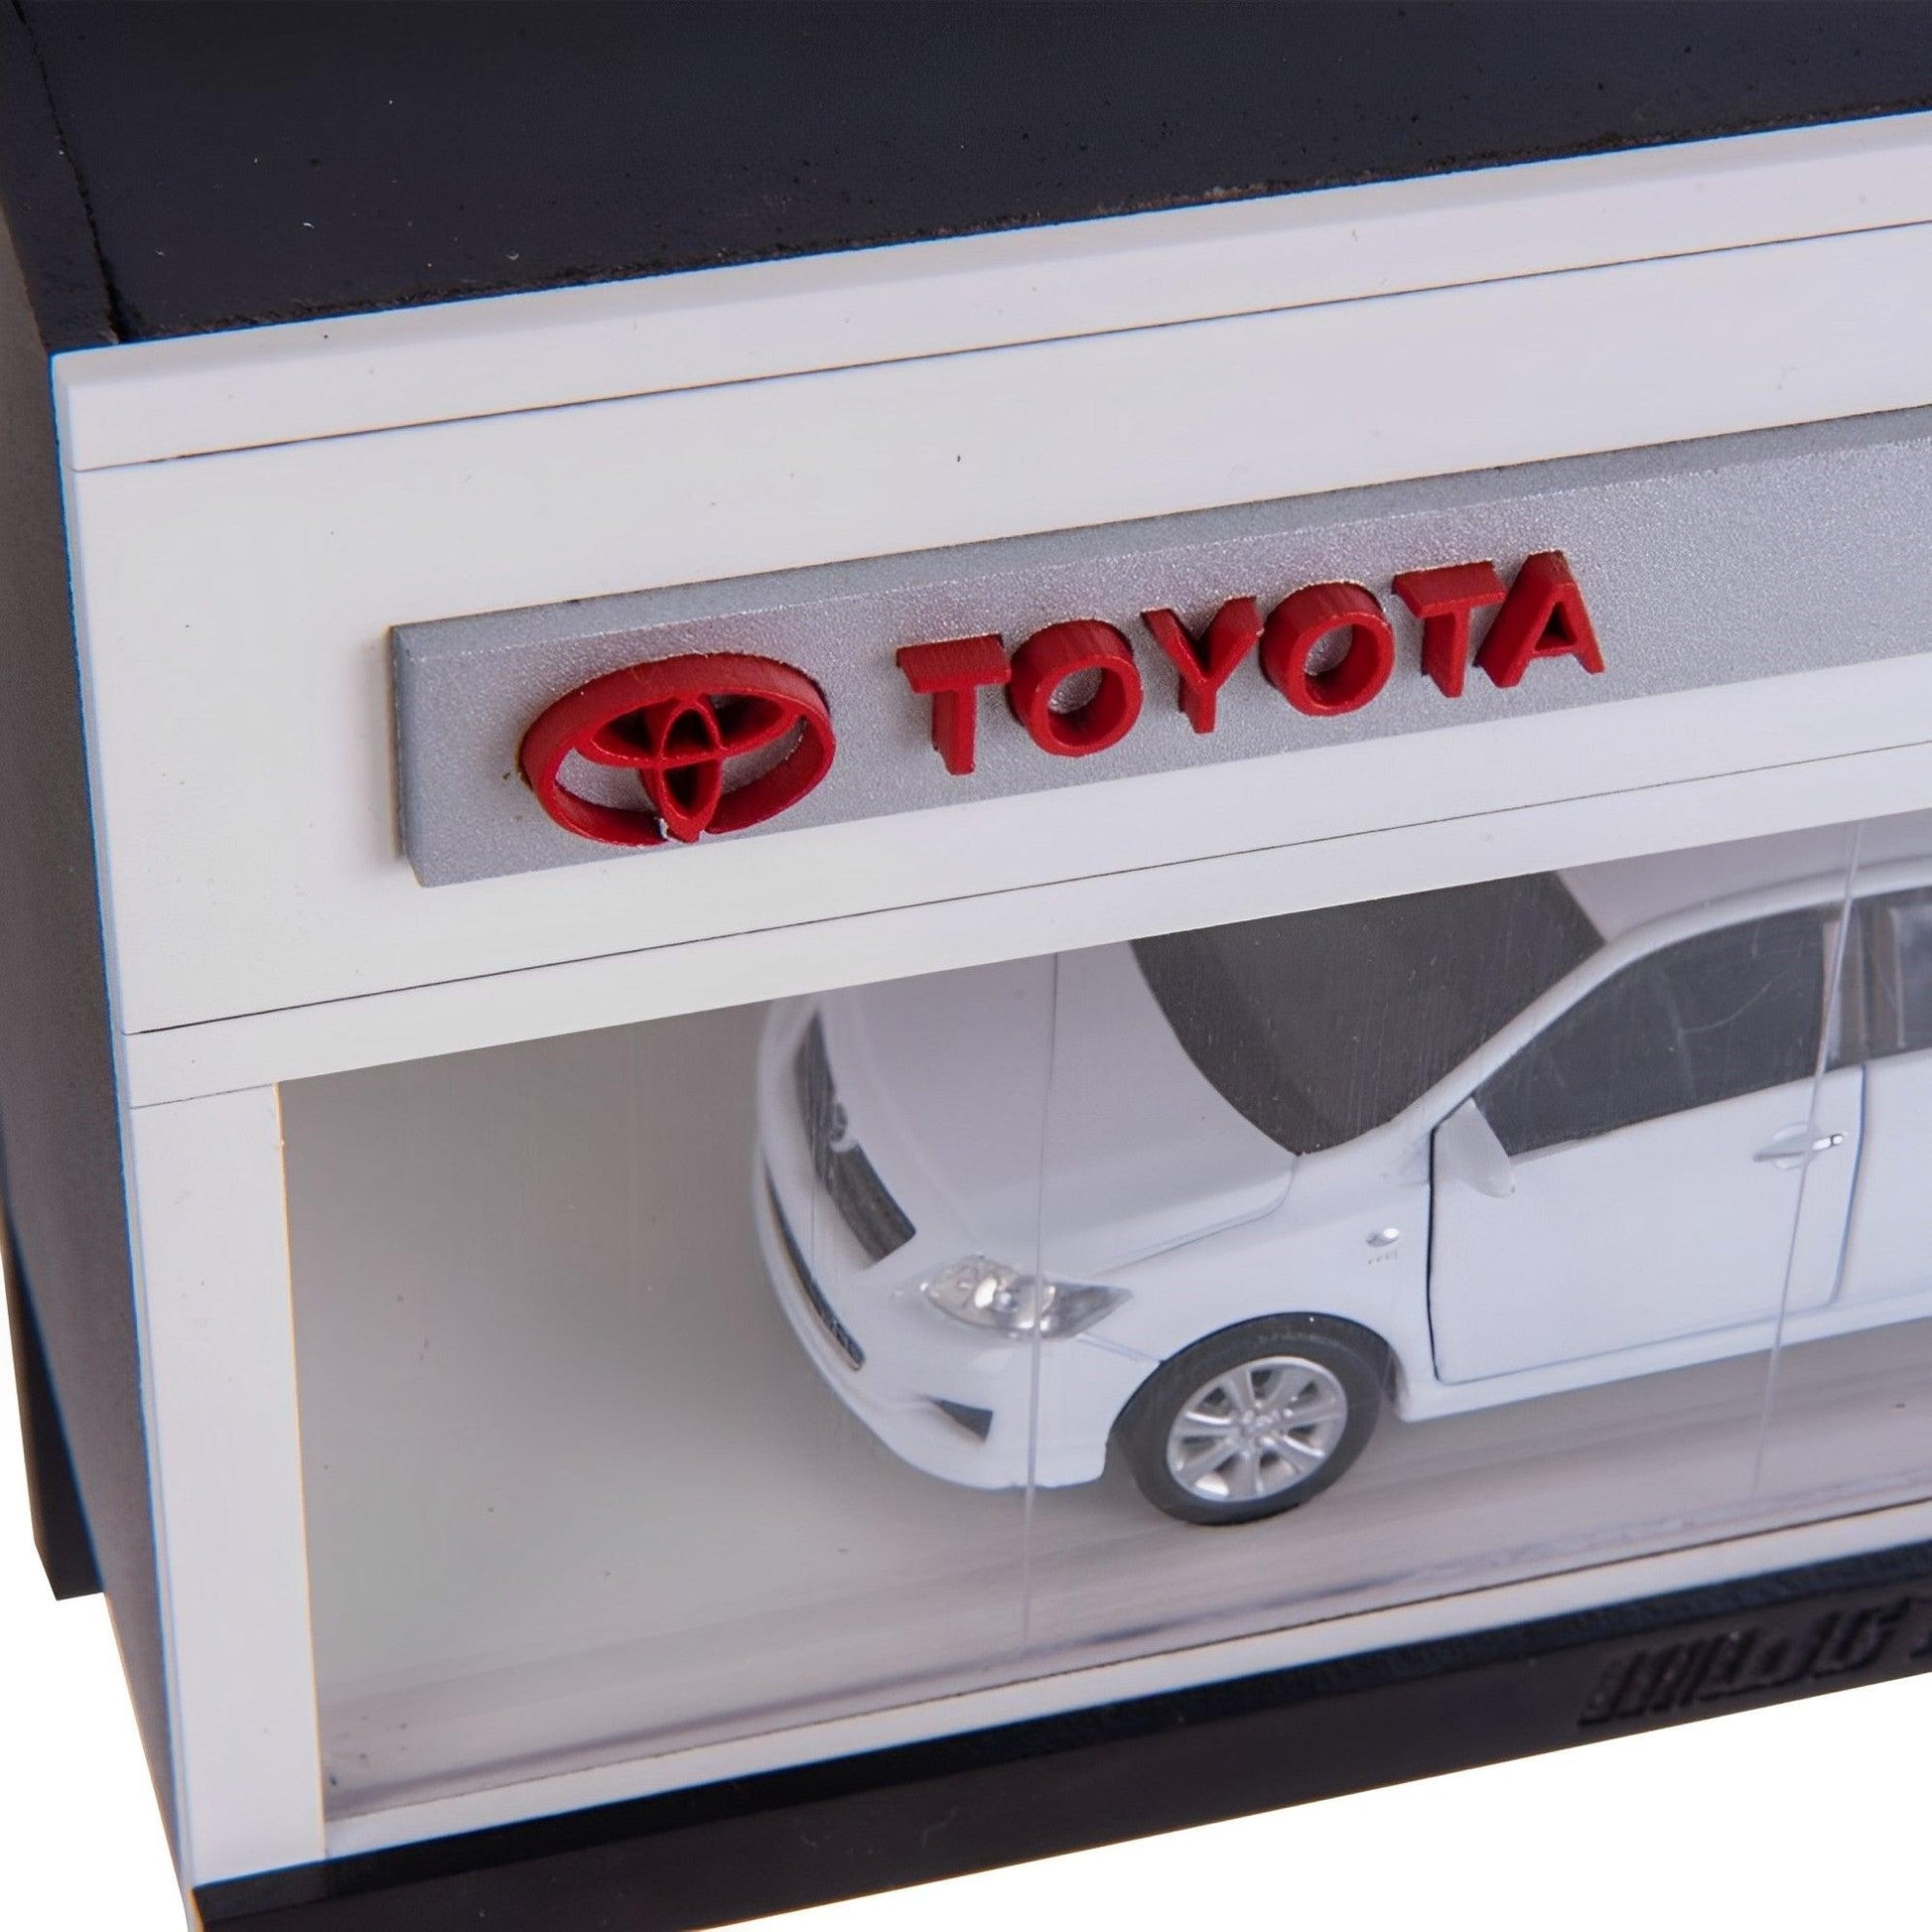 Toyota Dealership Wall Key Hook Rack - Exclusive Item - Handcrafted Key Holder - Brazilian Shop